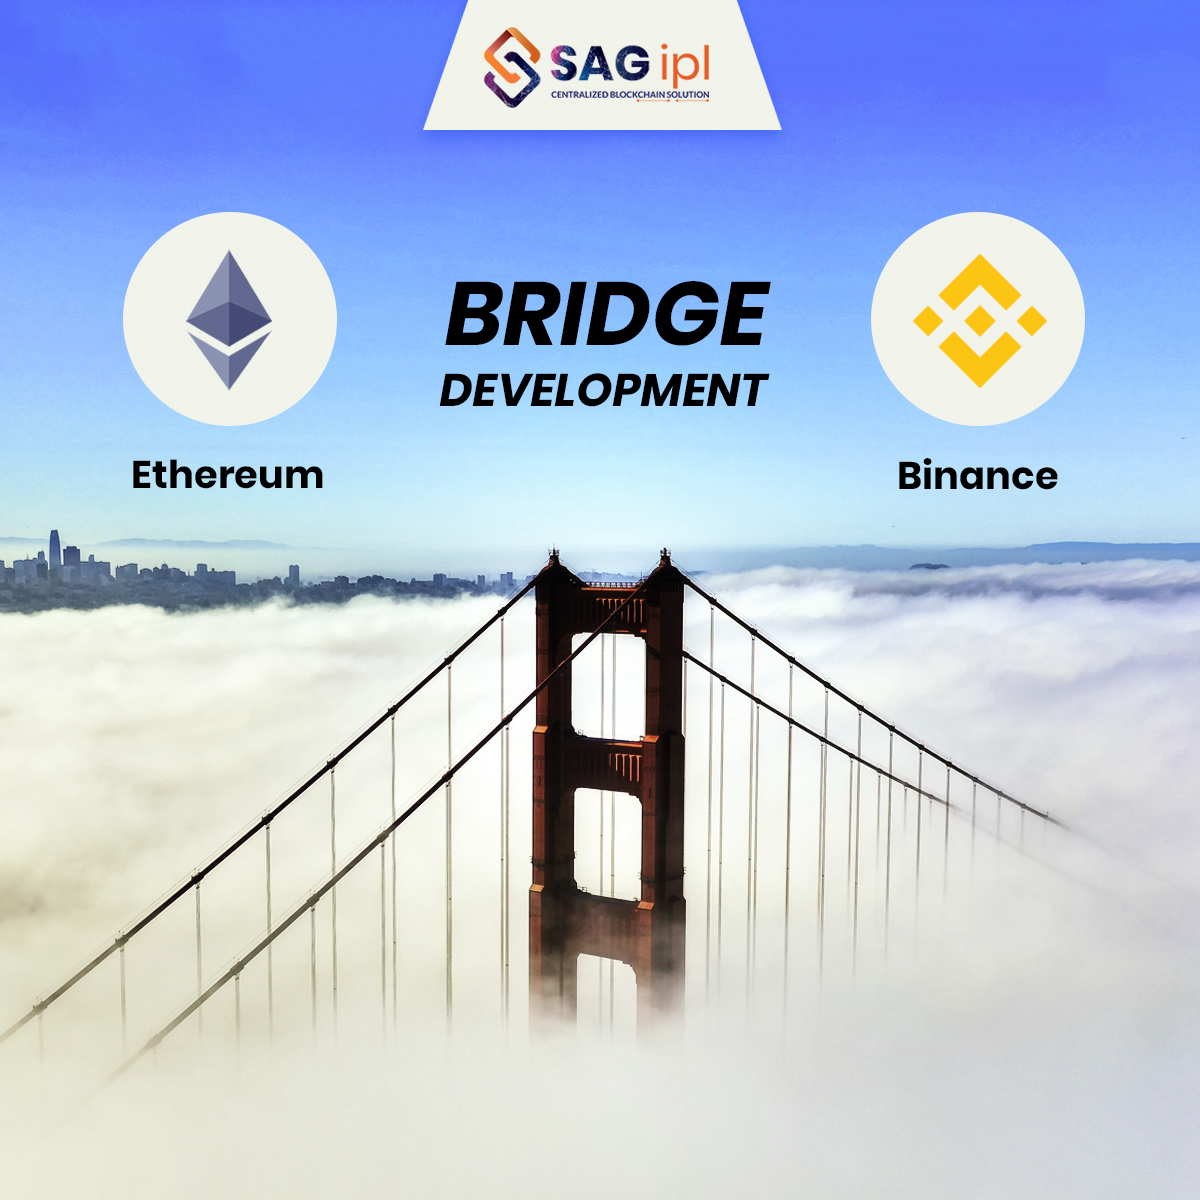 Ethereum to Binance Bridge Development